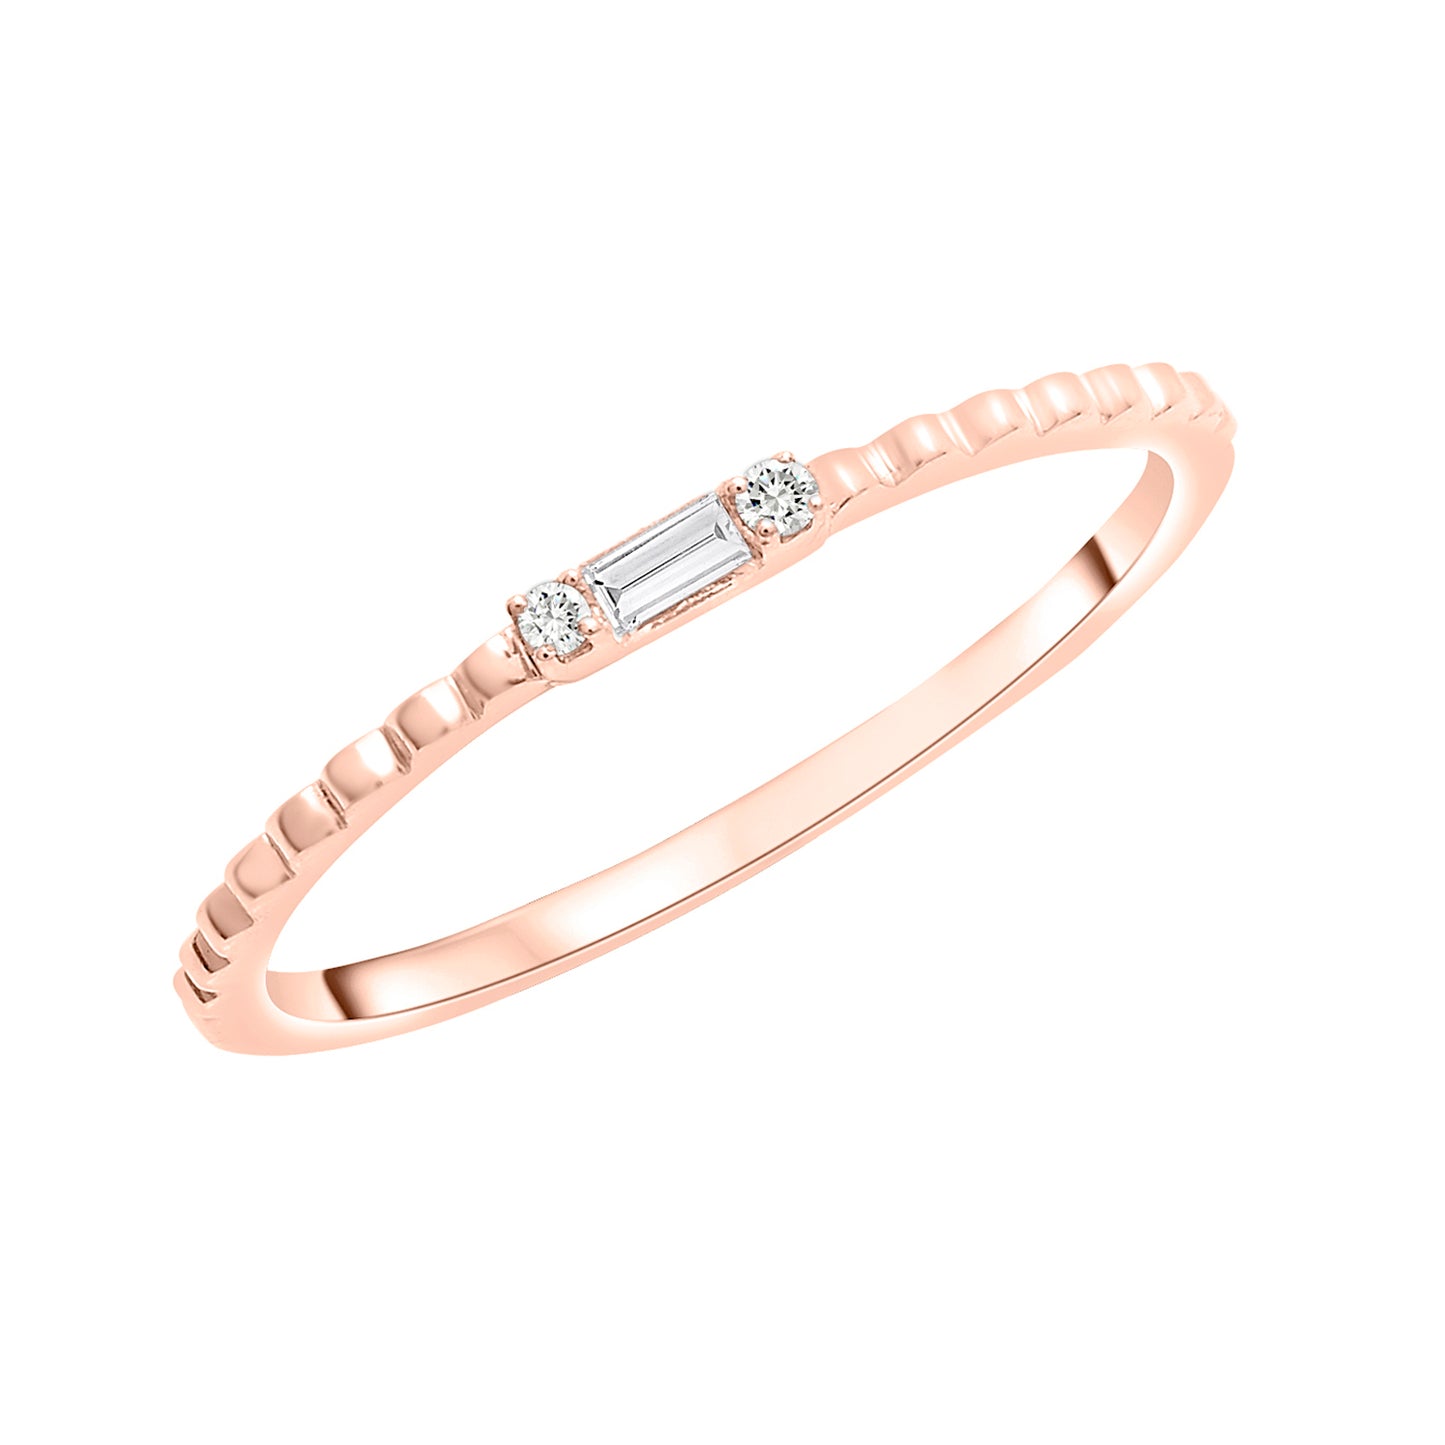 Renata Mini Baguette Diamond Ring in Rose Gold